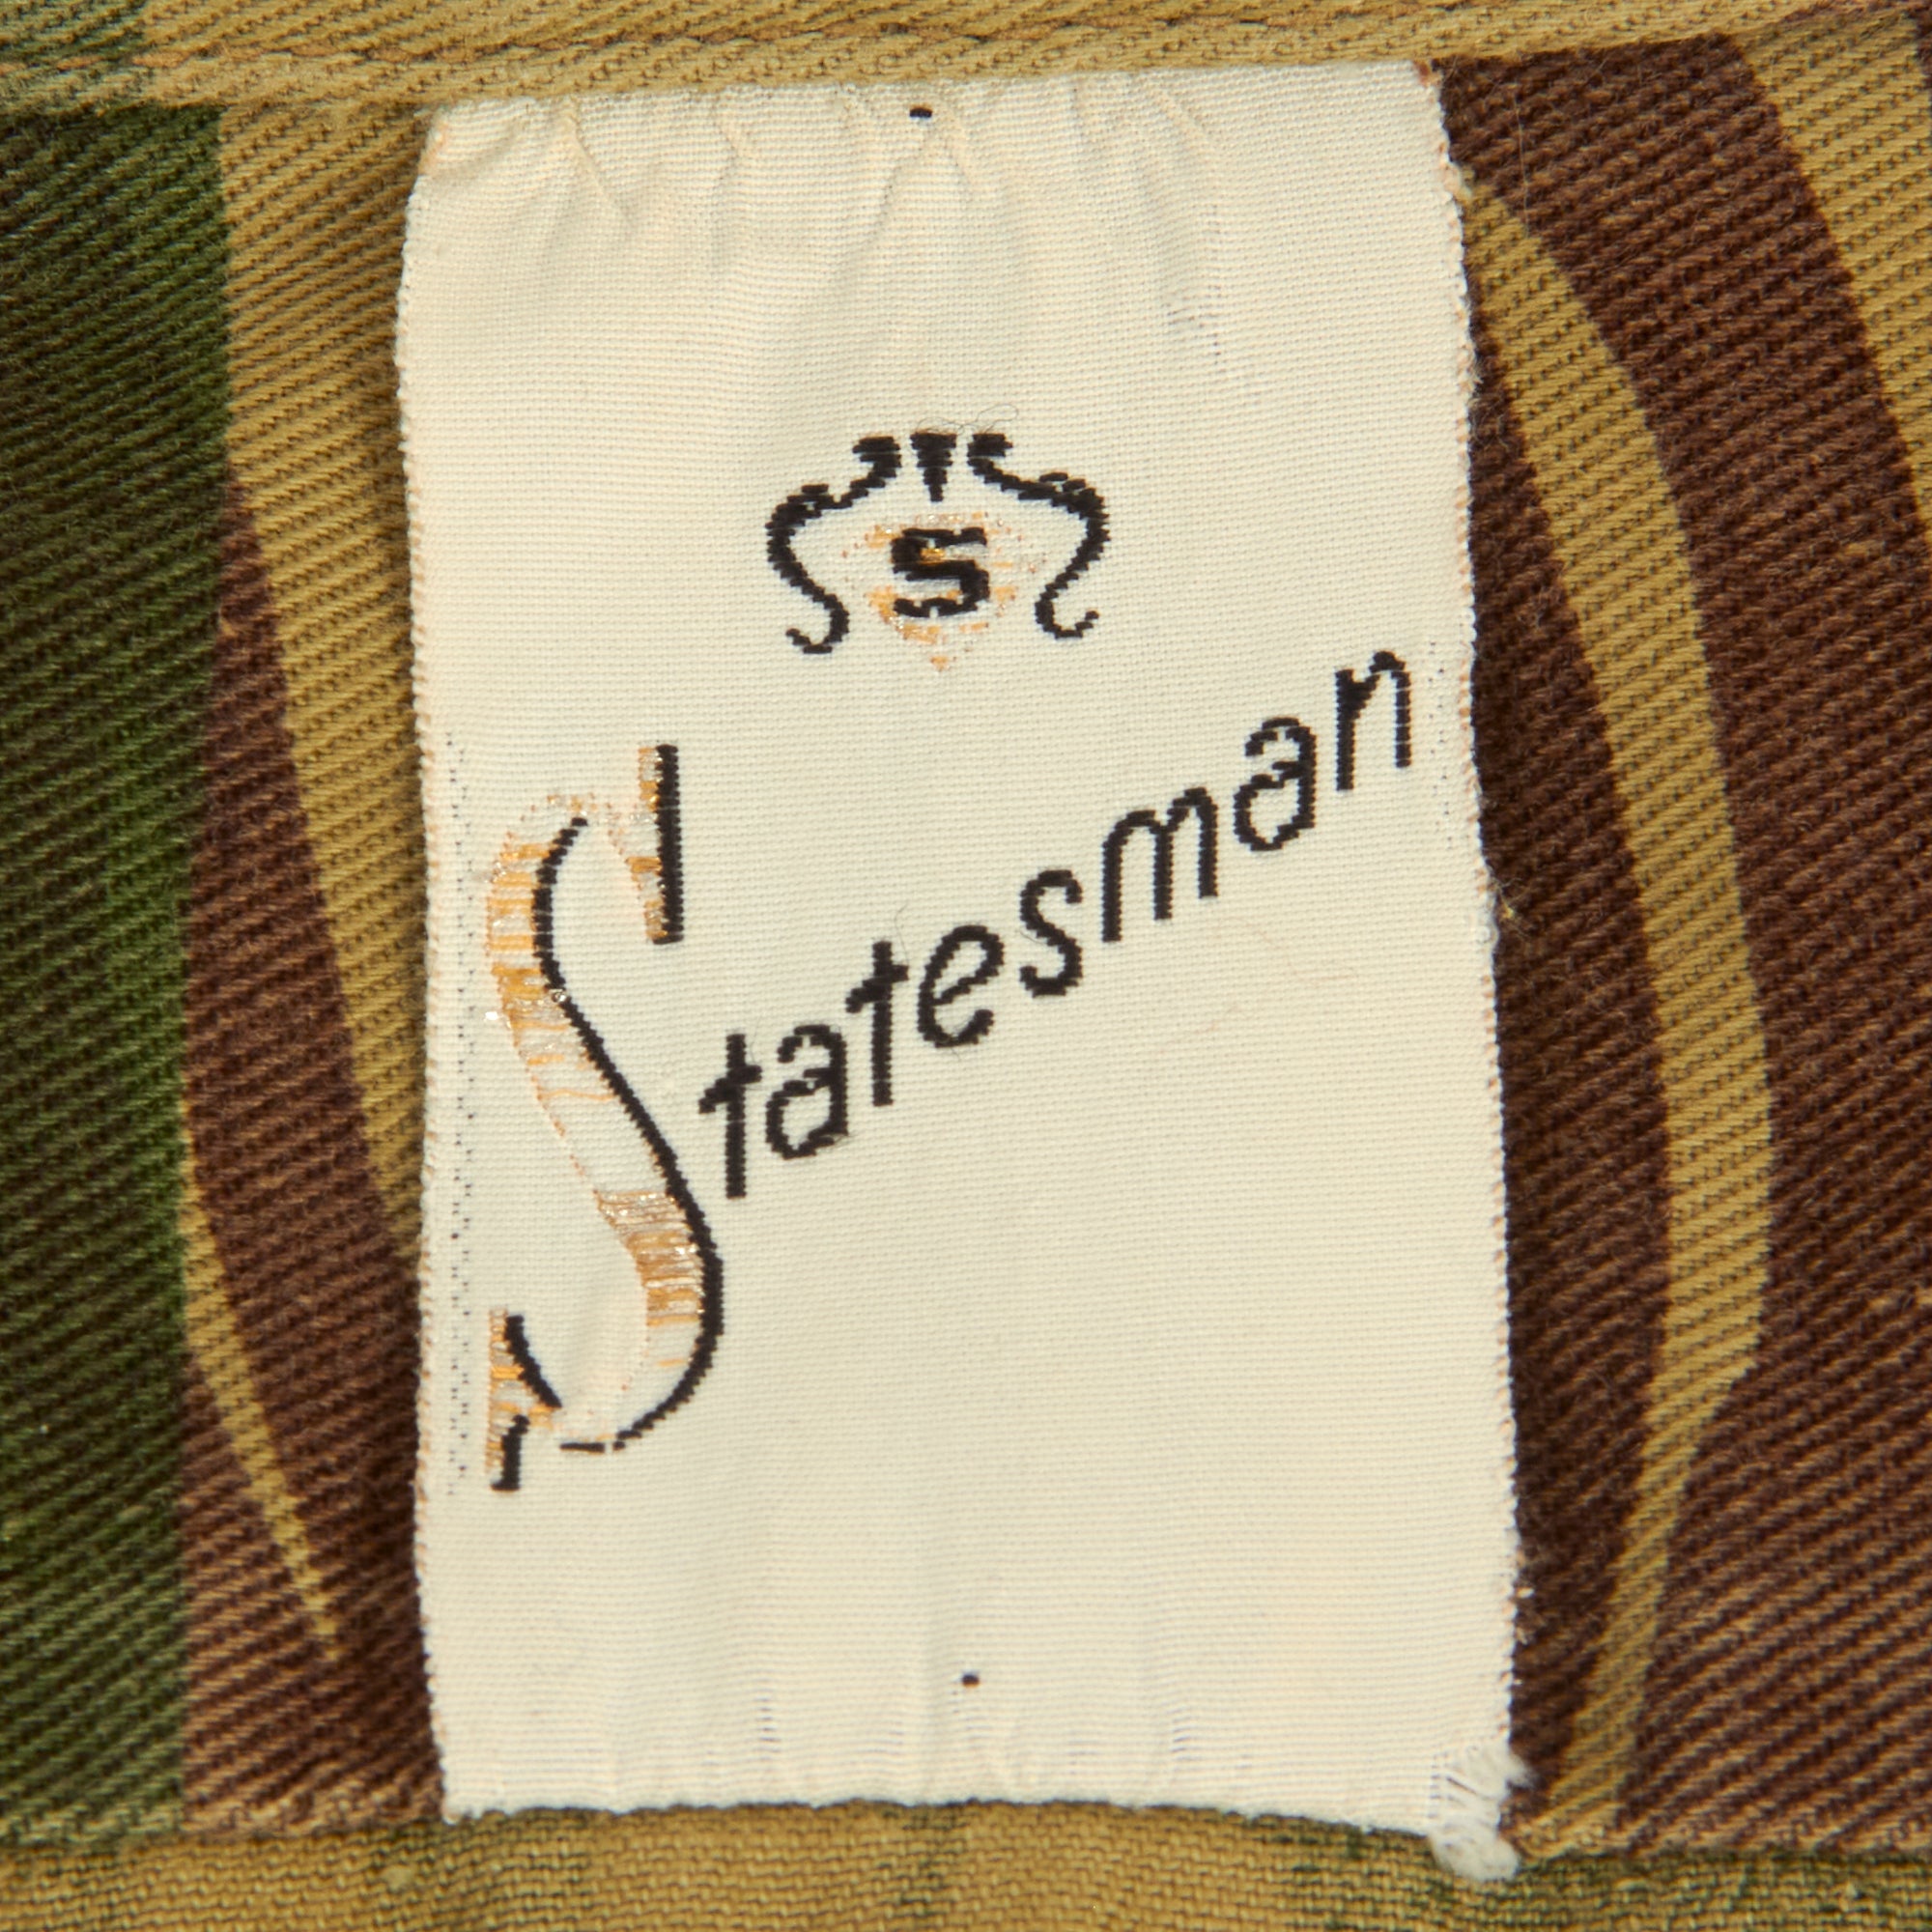 Rhodesian Army Brushstroke Camouflage Shirt by Statesman